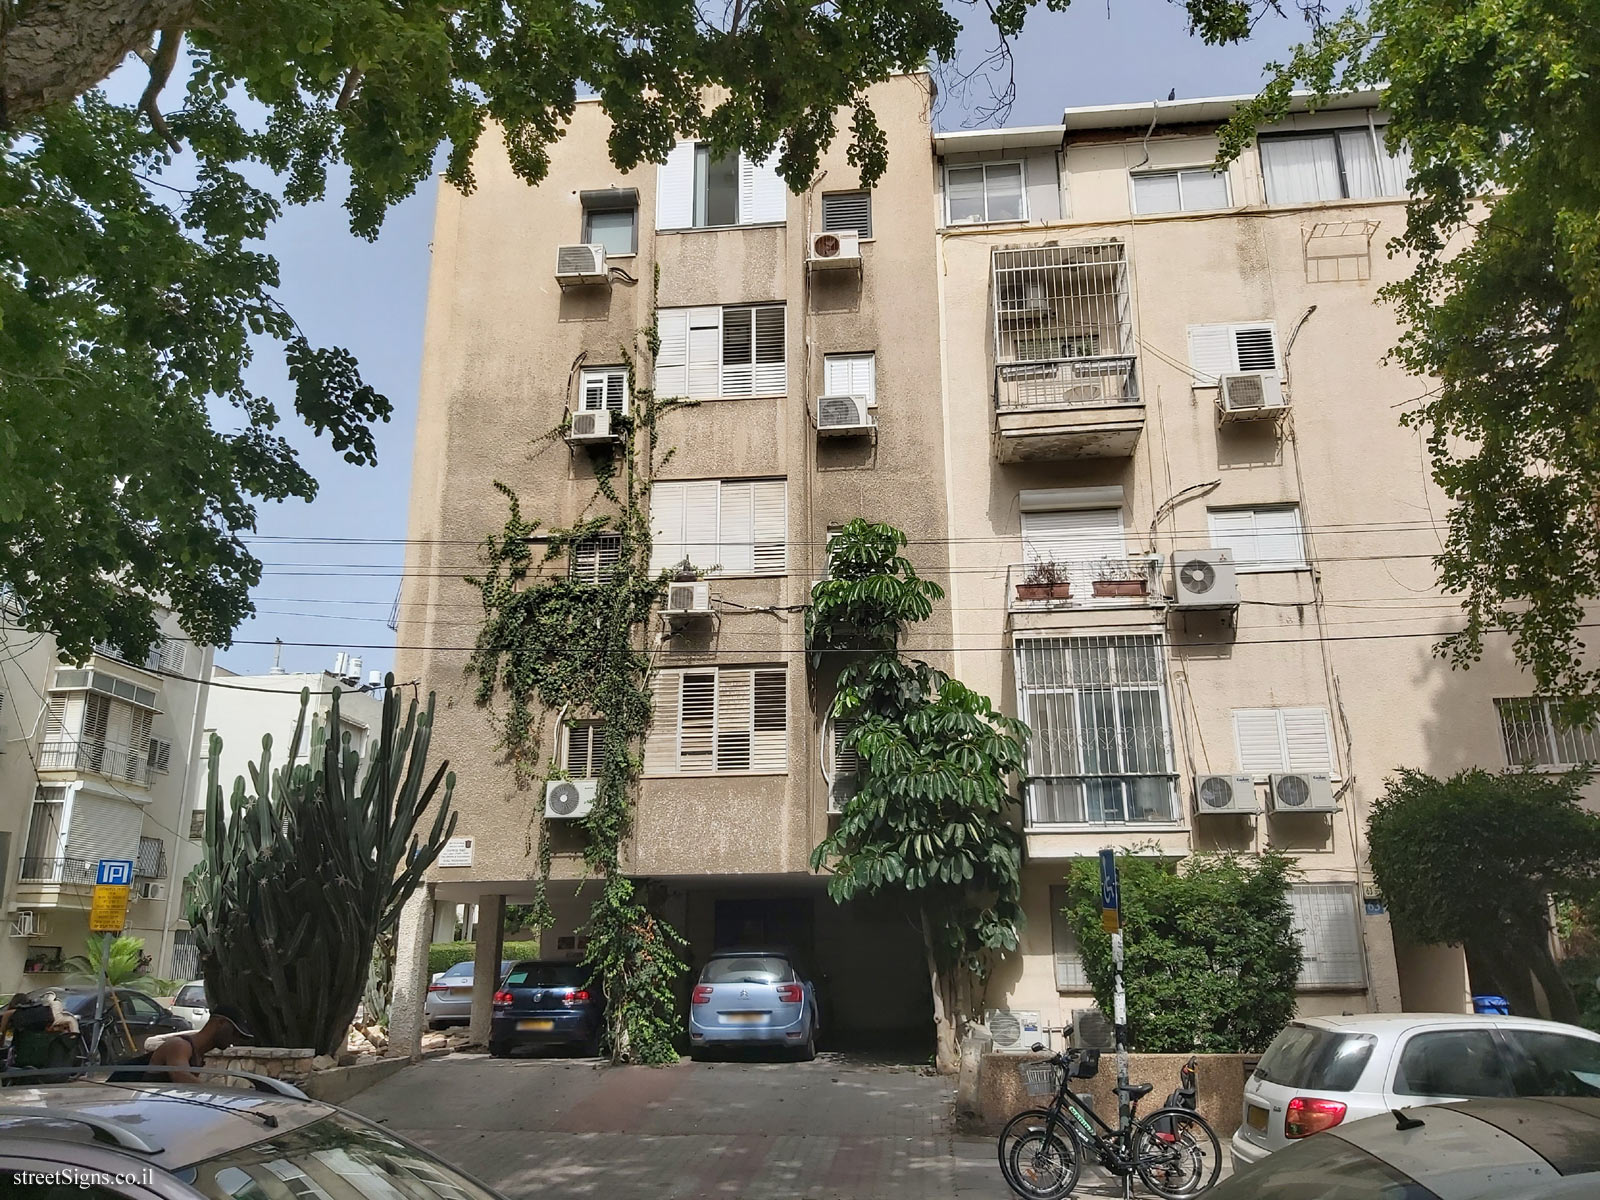 The house of Igal Mosinson - Nakhum Sokolov St 61, Tel Aviv-Yafo, Israel